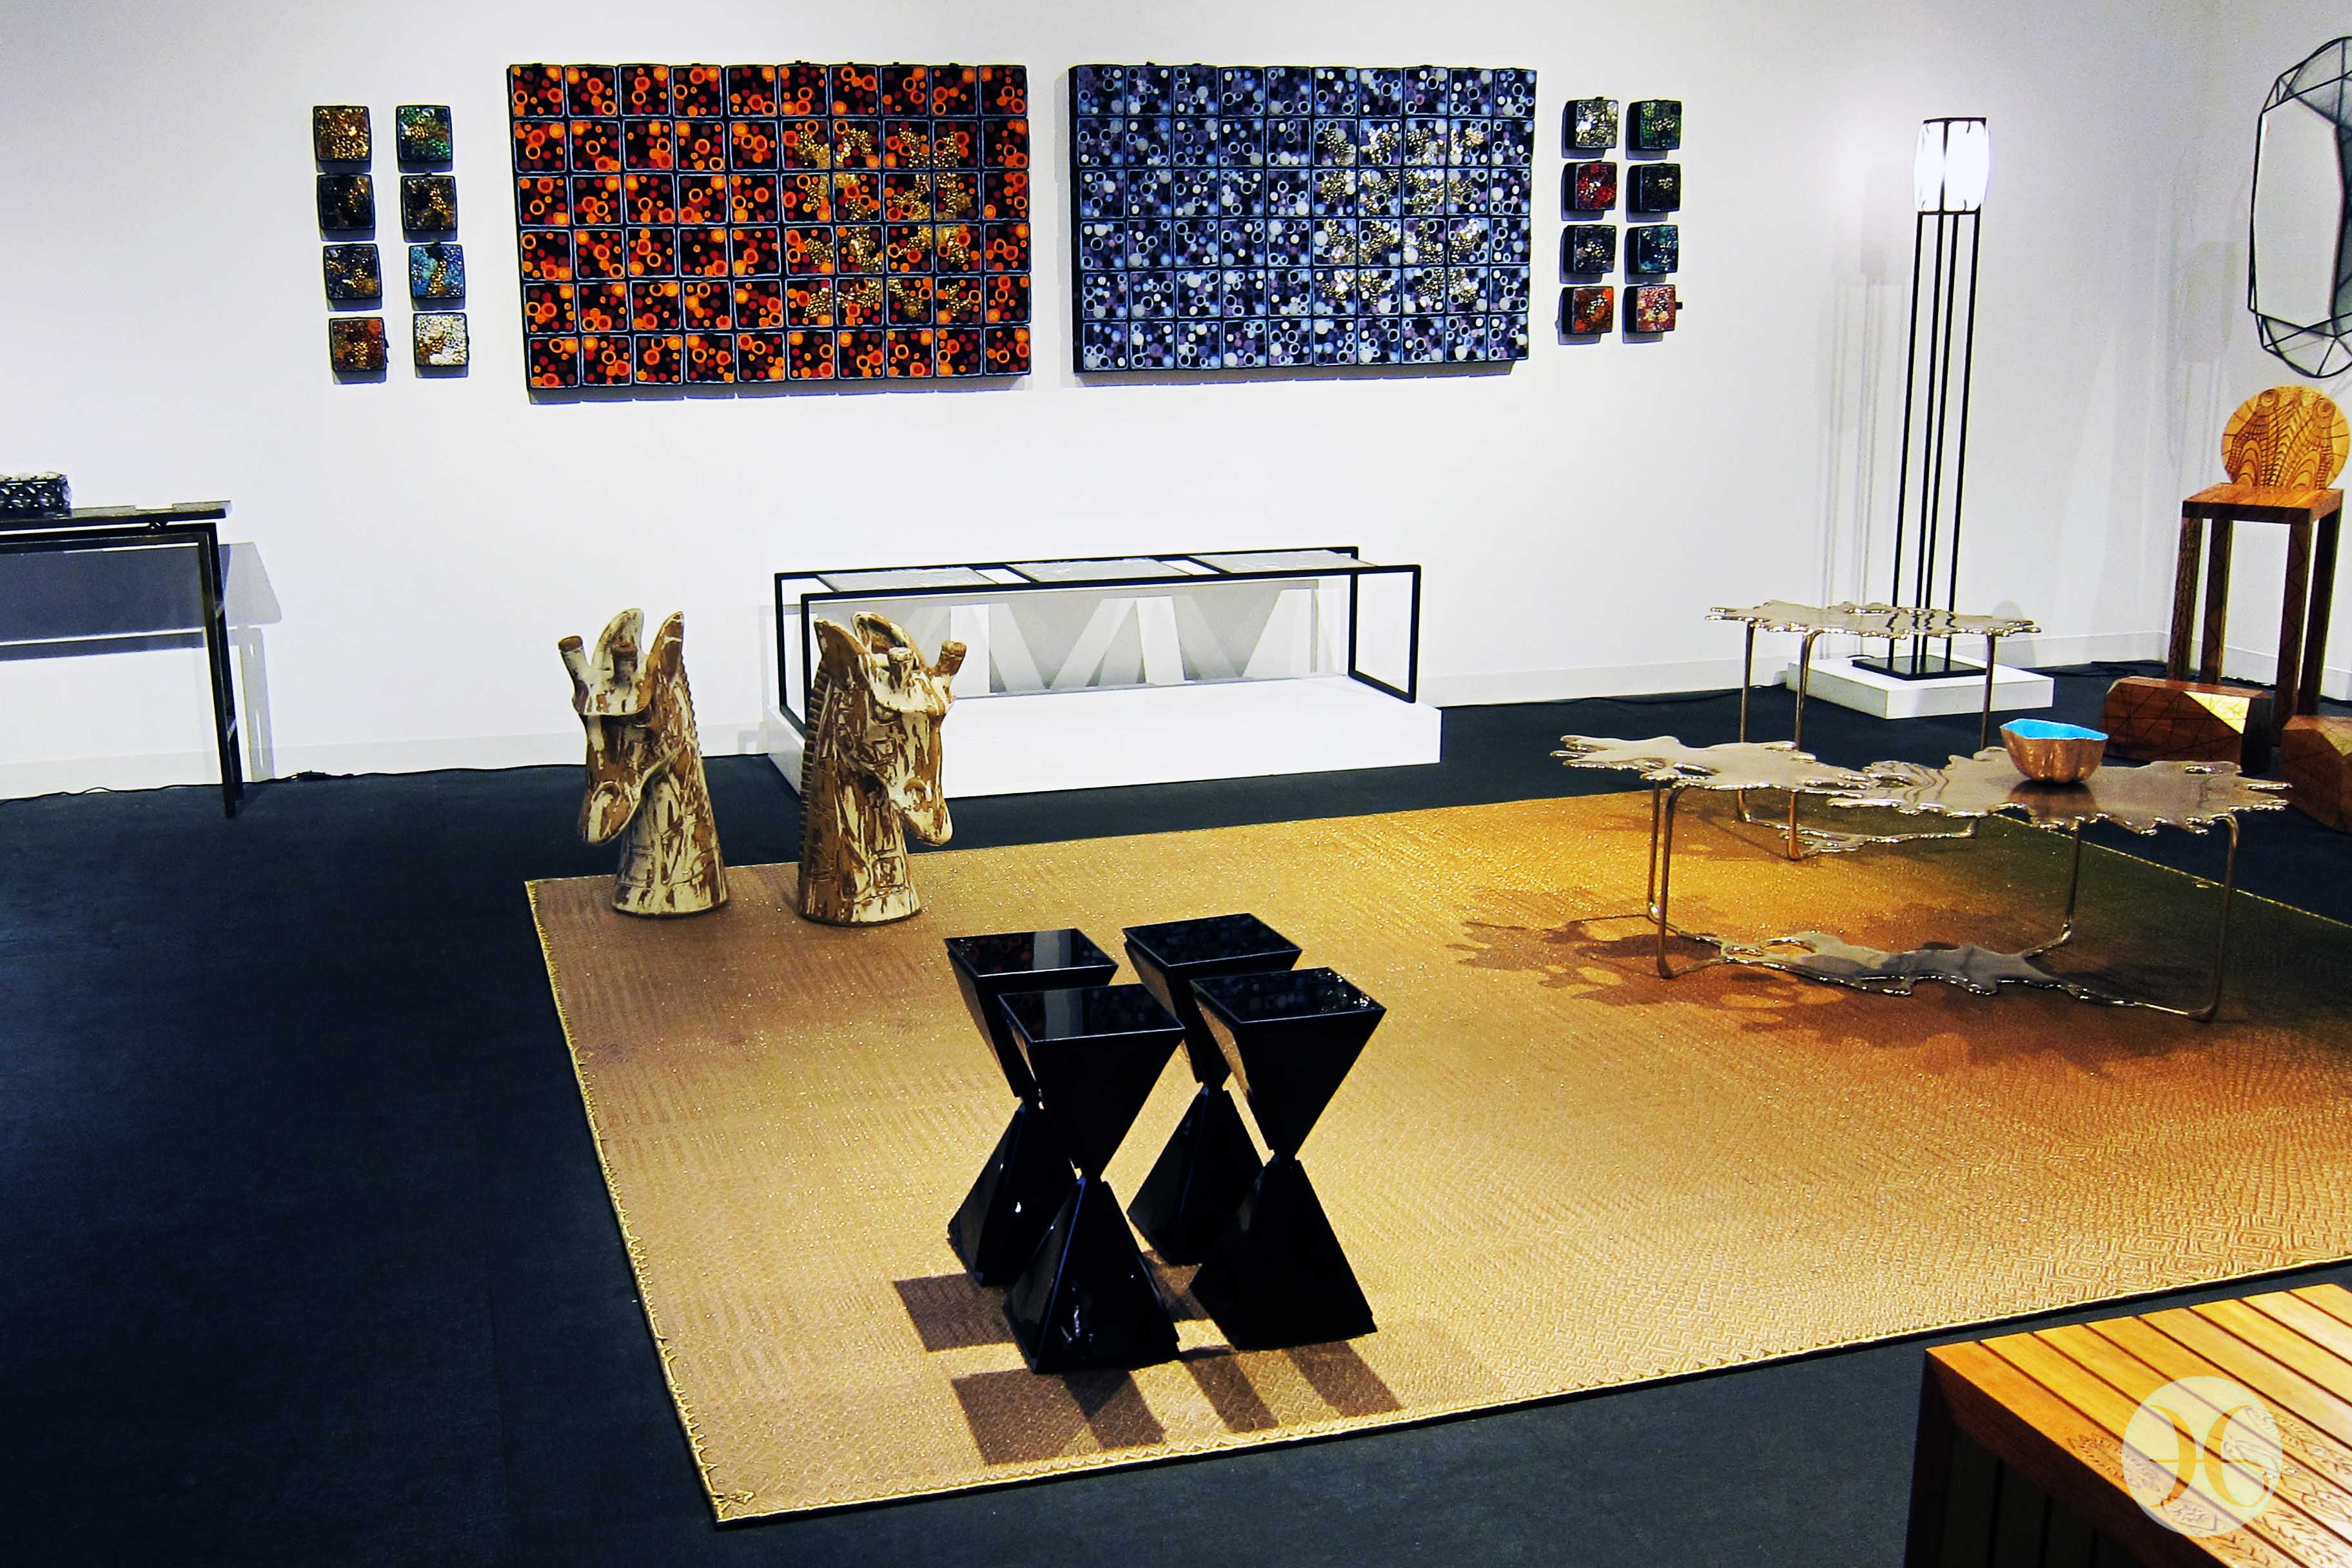 Cristina Grajales Gallery